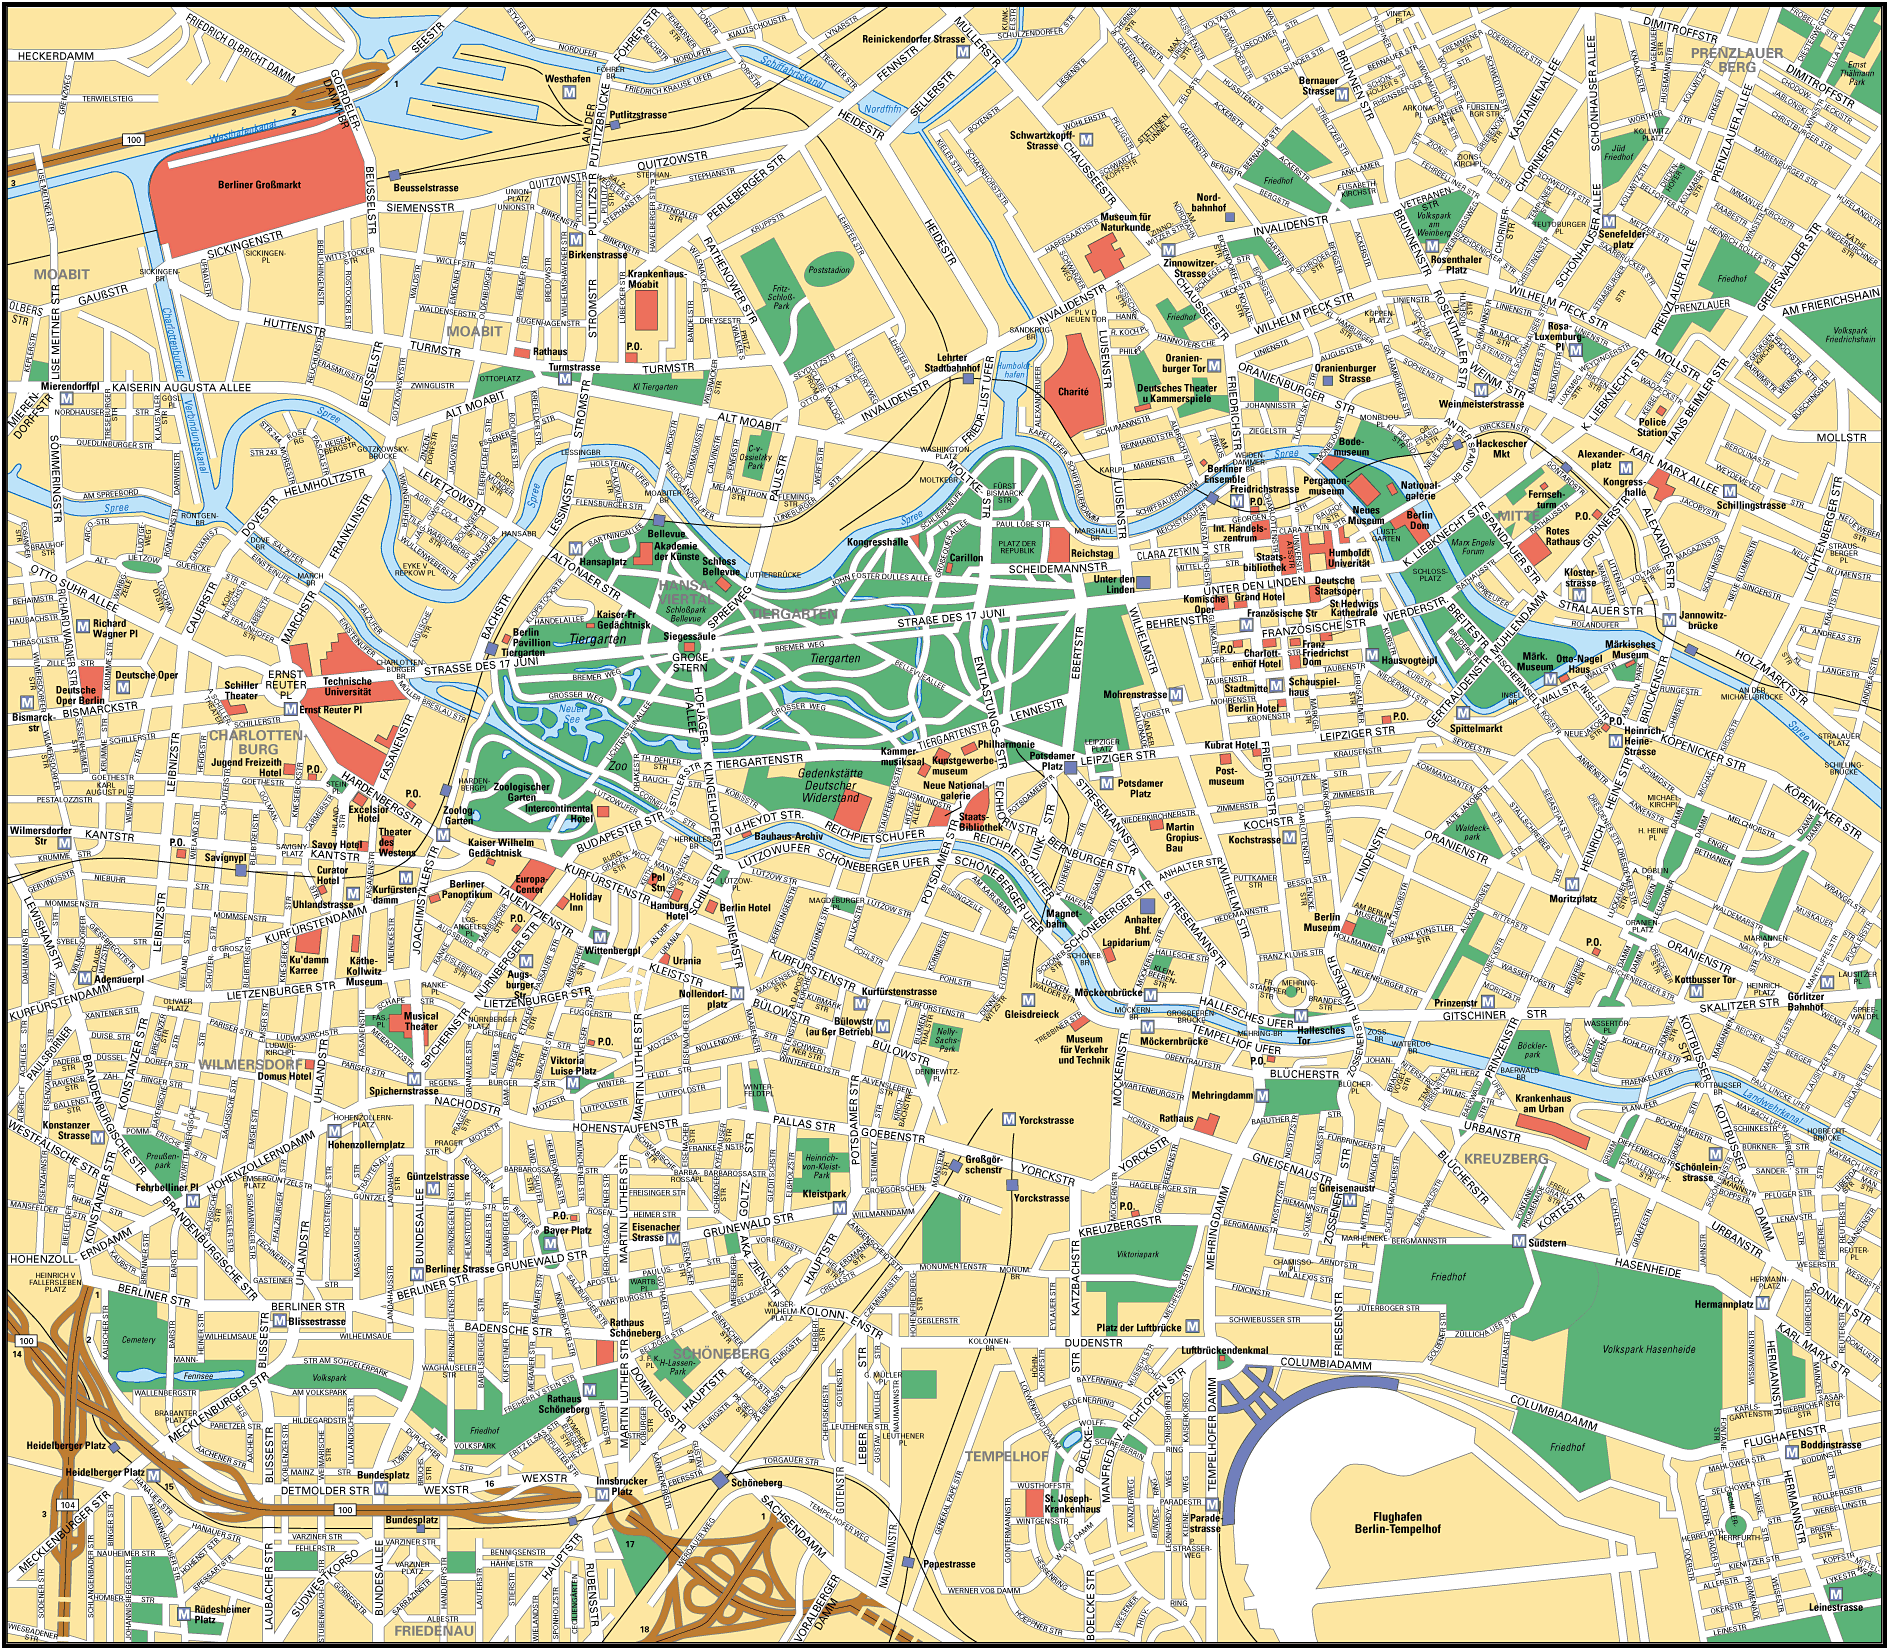 Mapa Berlín